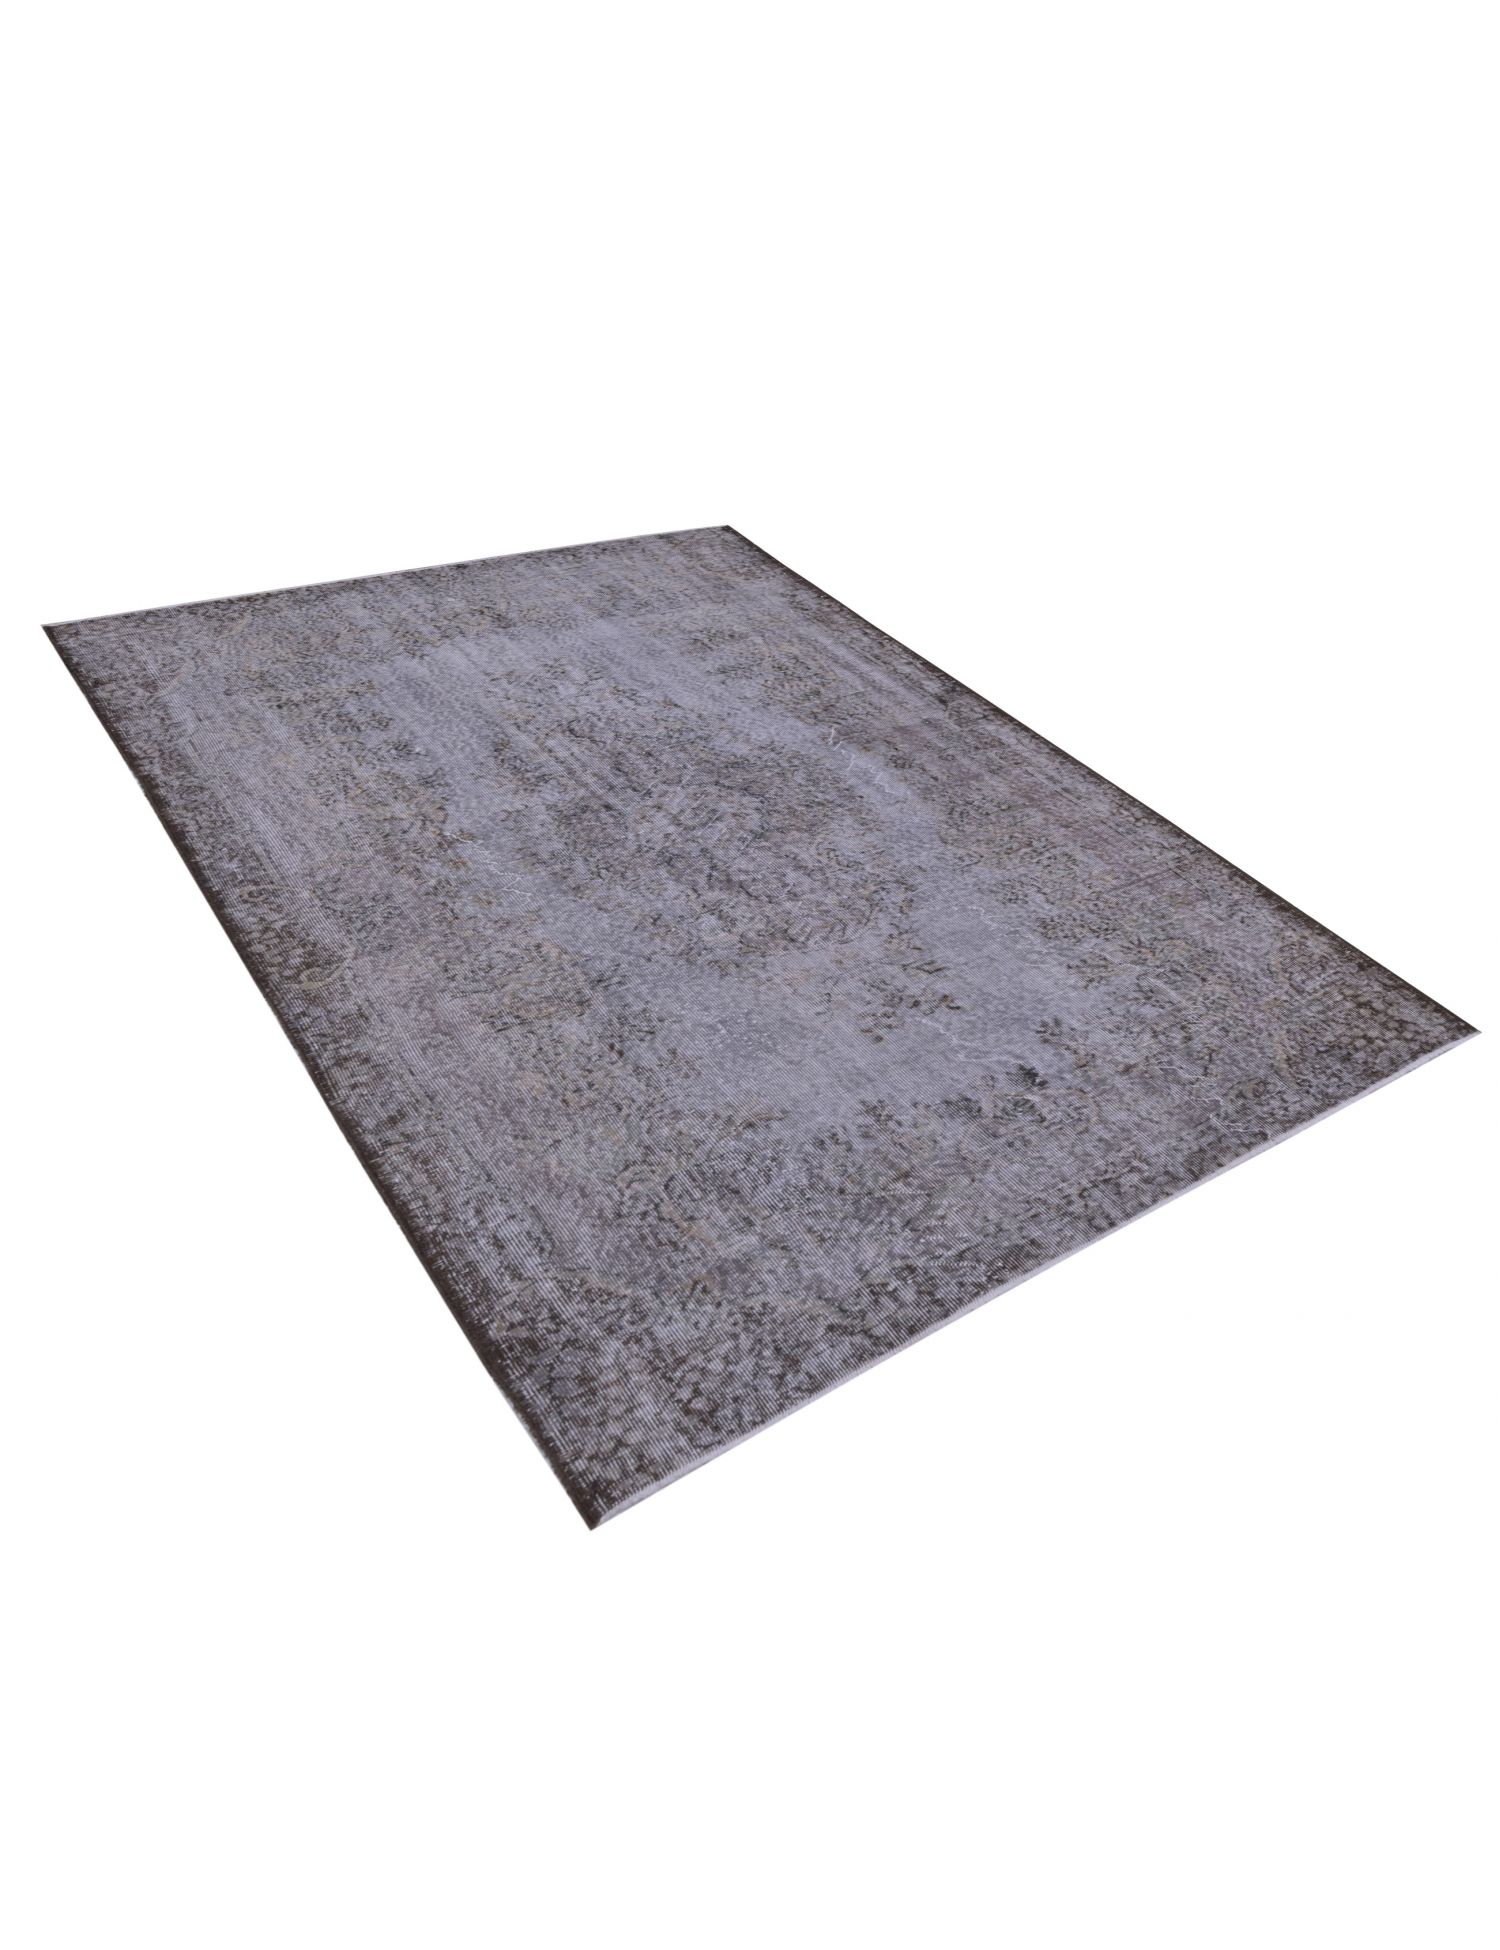 vintage teppich türkis   grau <br/>274 x 177 cm